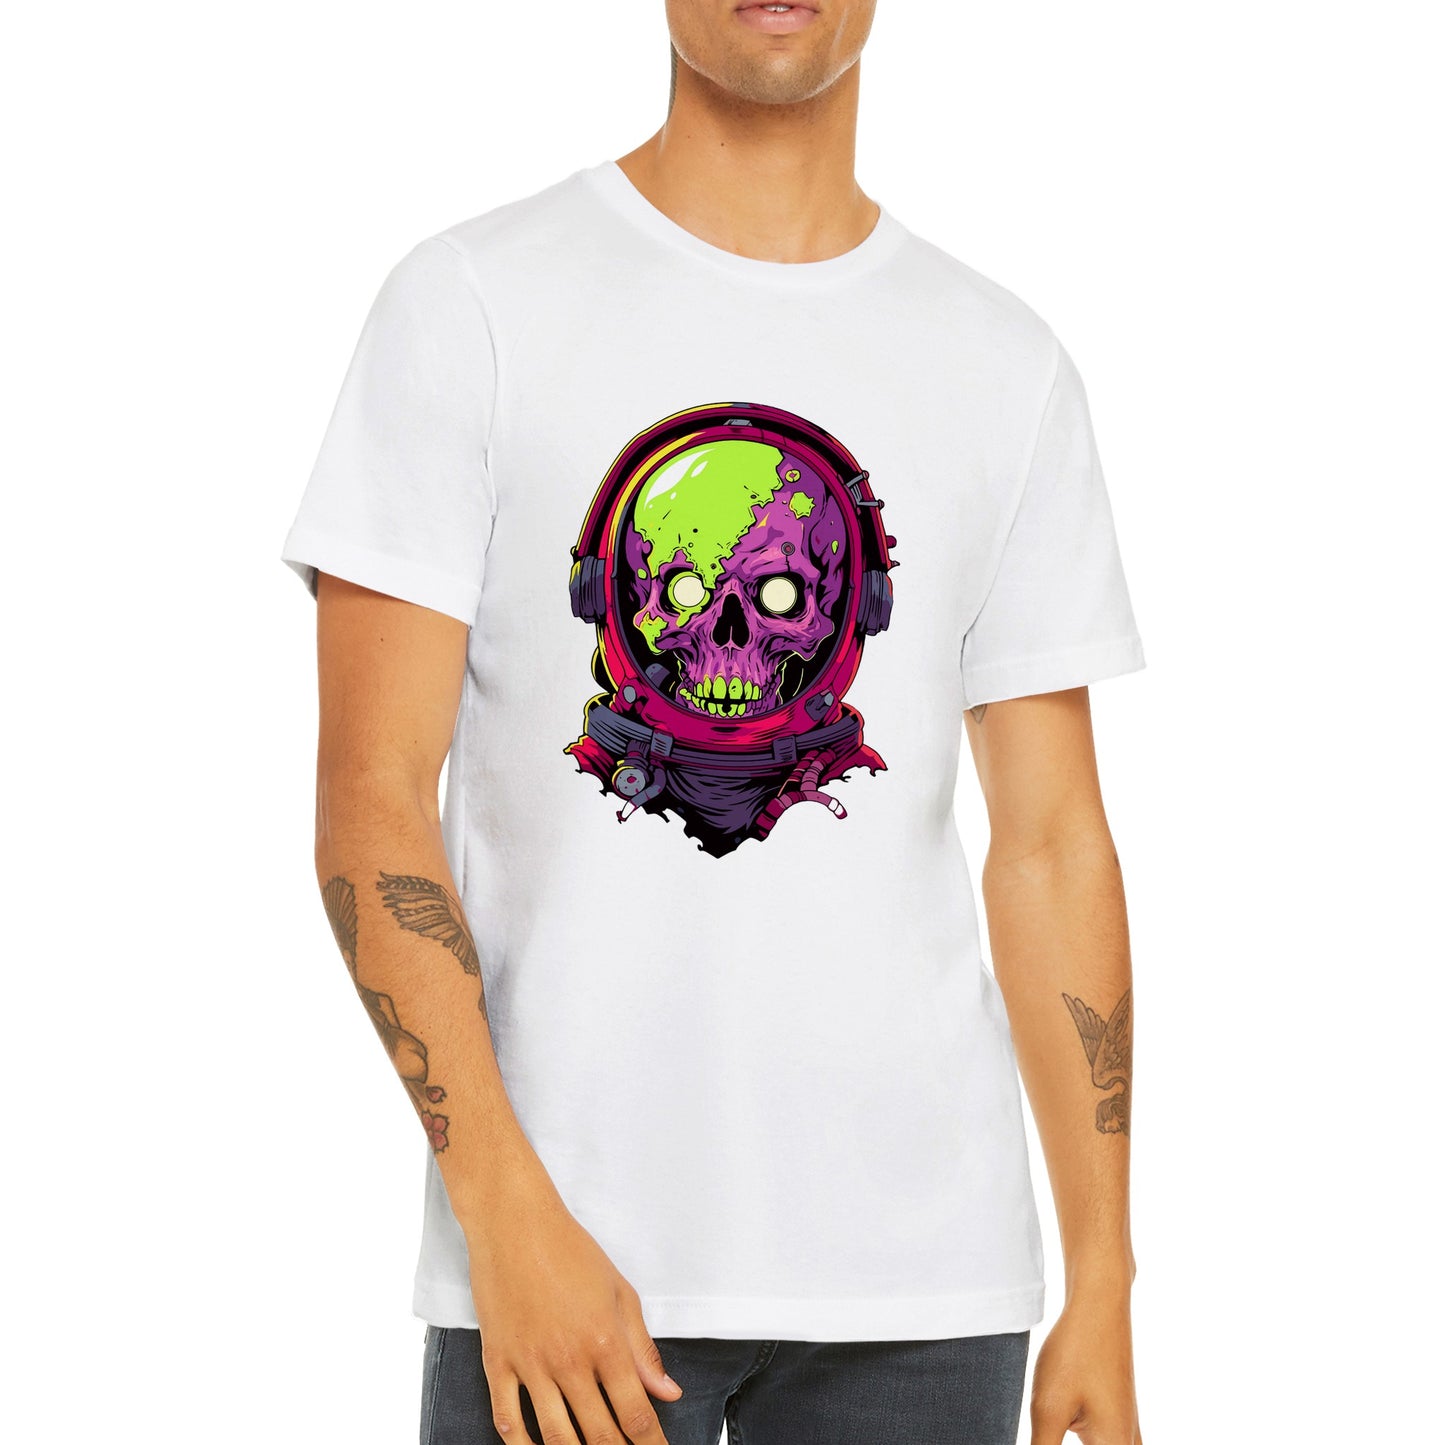 Zombie Astronaut T-shirt